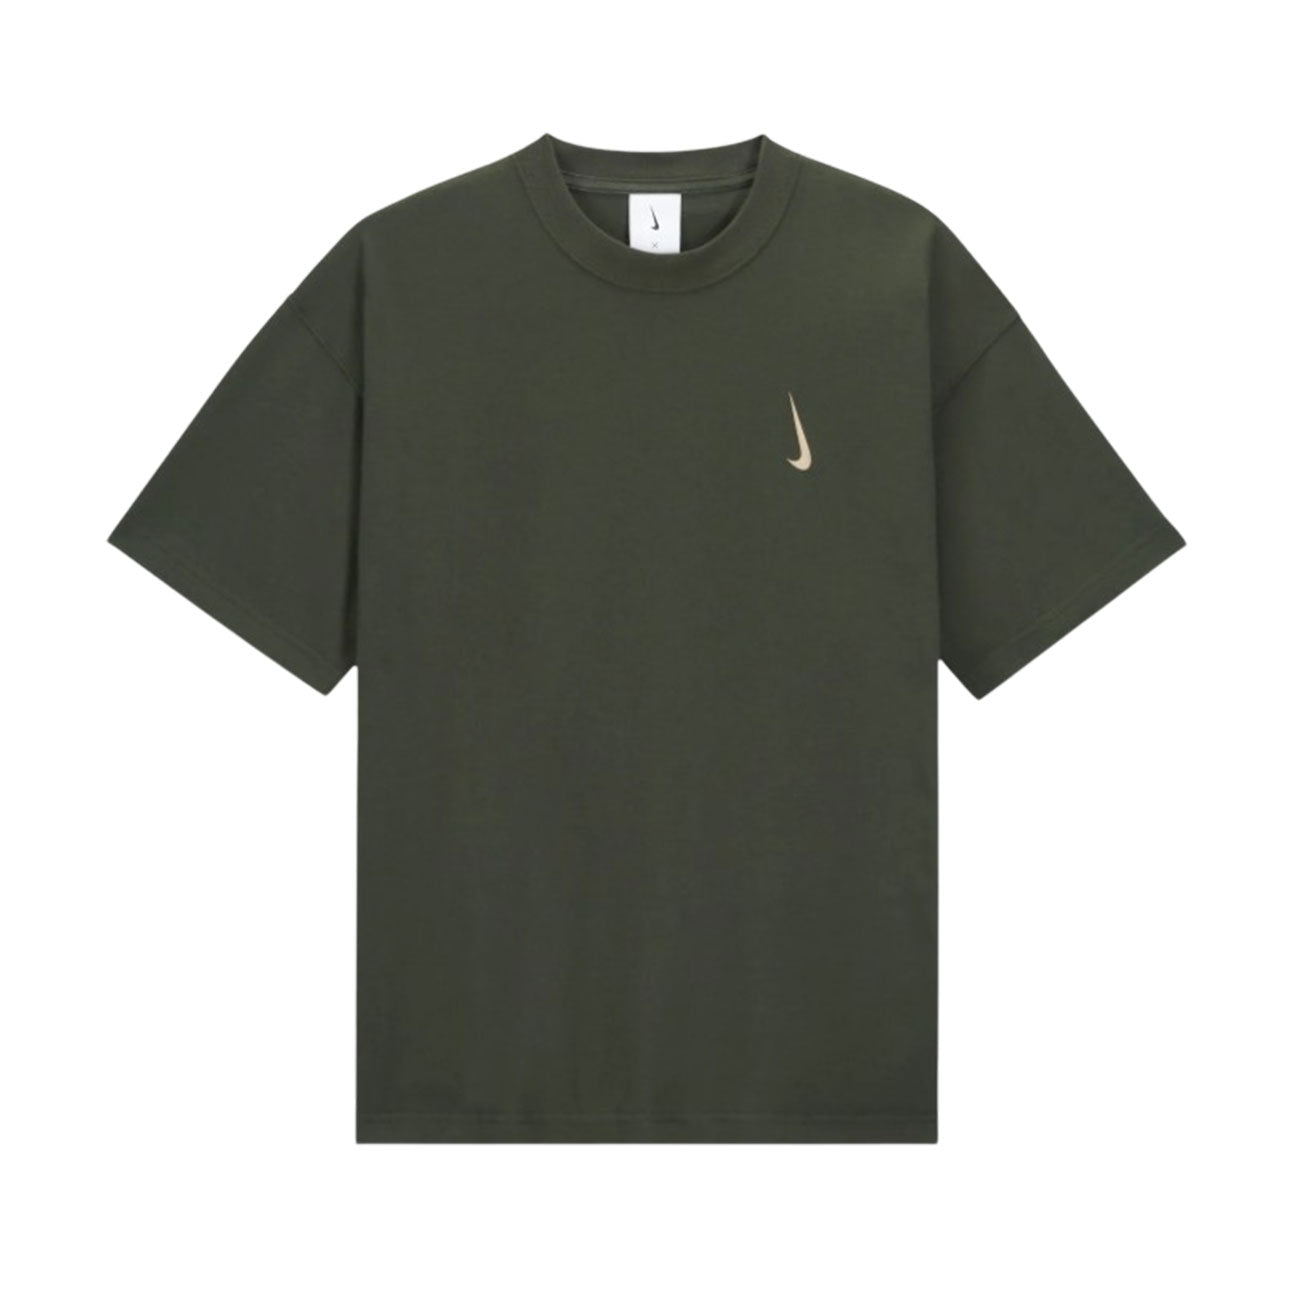 Nike x Billie Eilish T-Shirt (Sequoia/Mushroom/Mushroom)